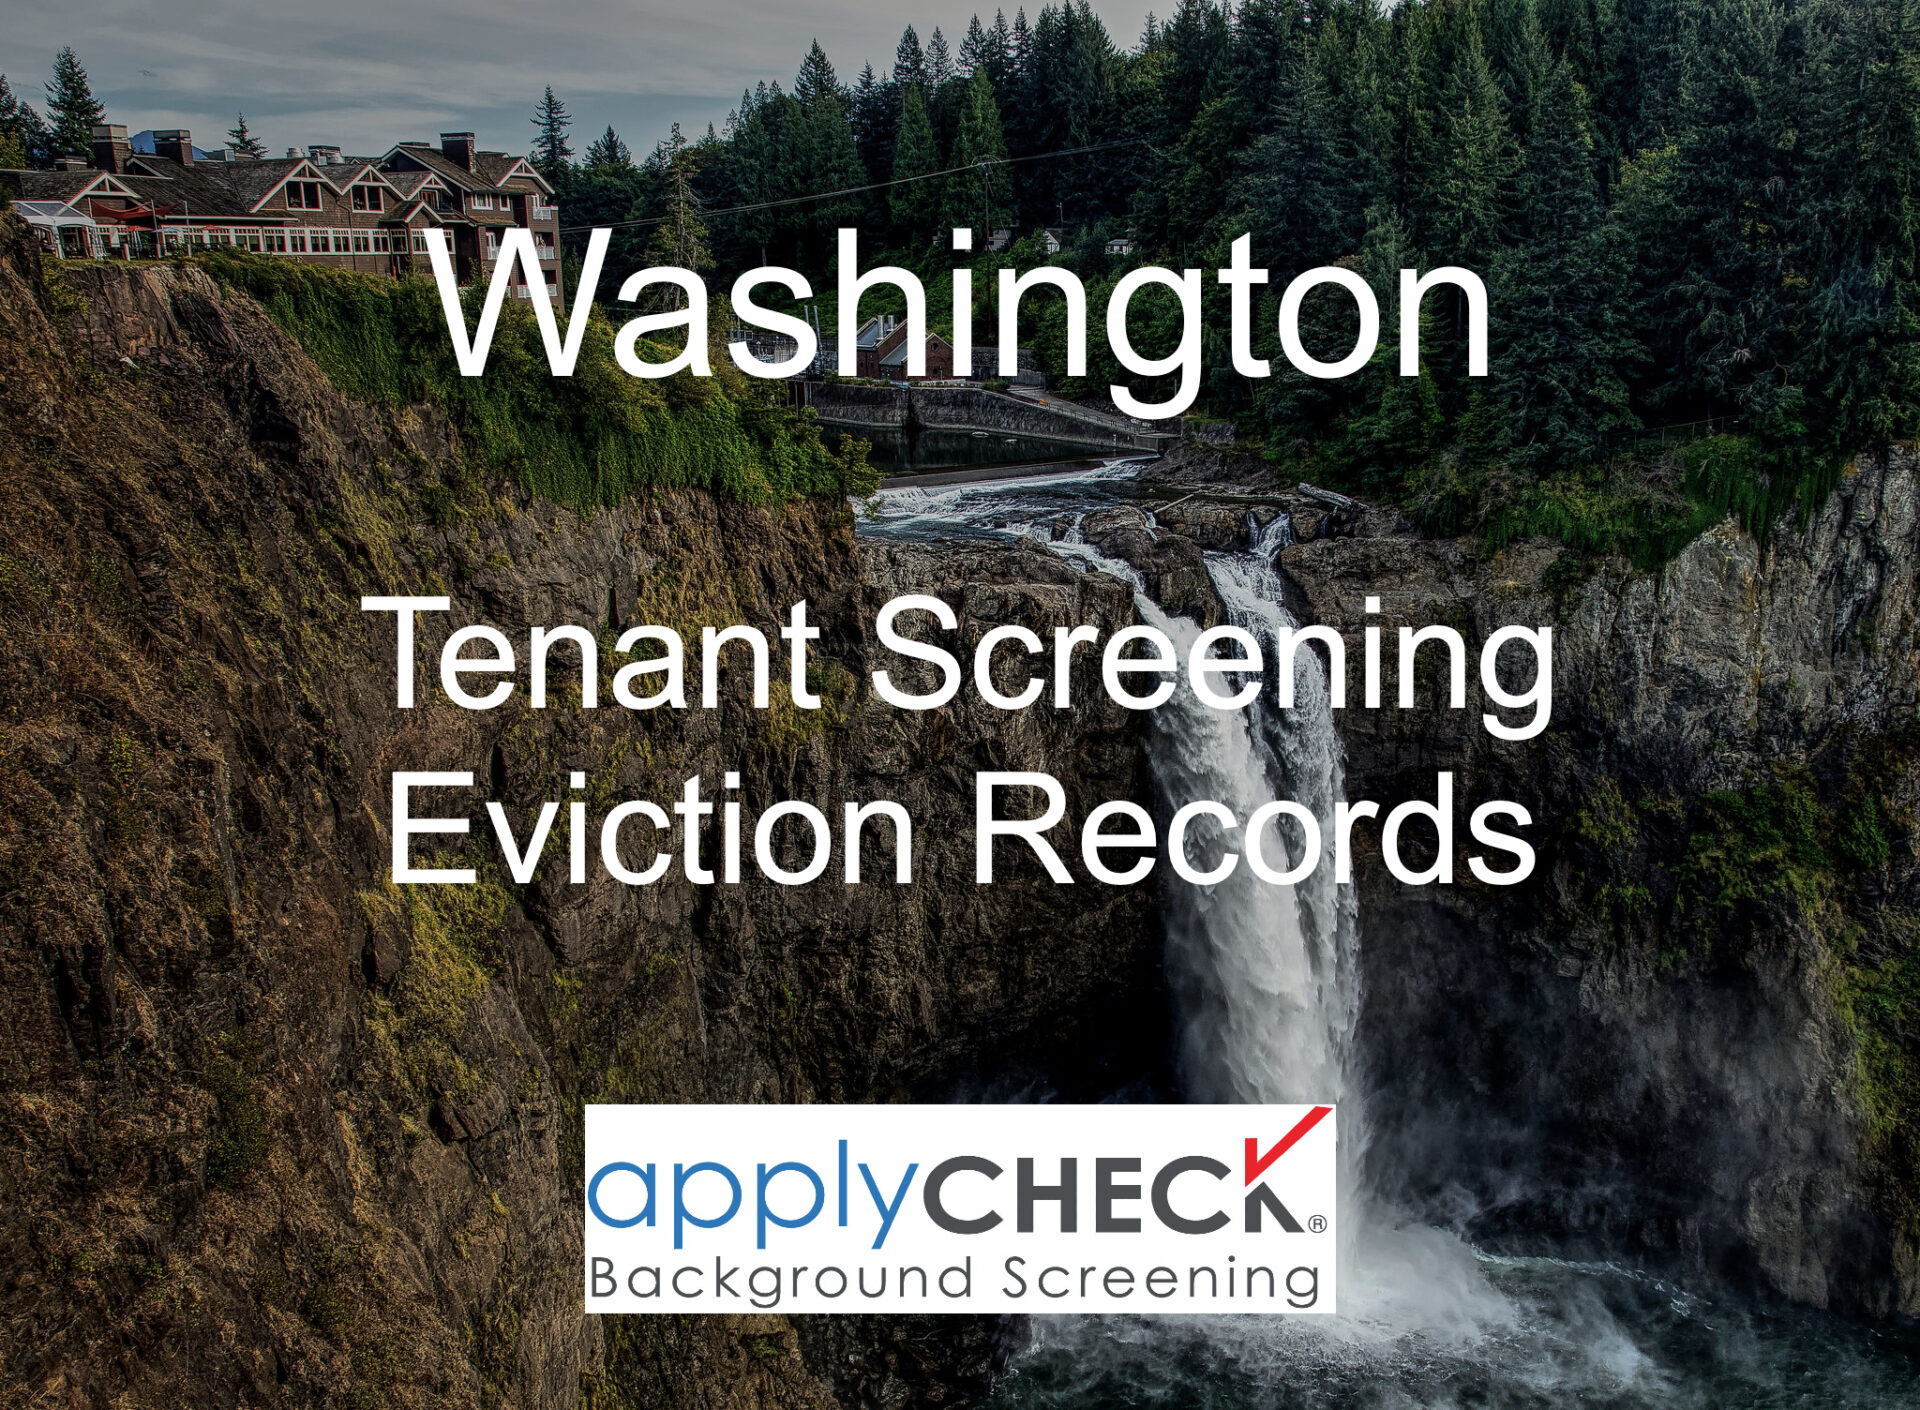 washington tenant screening and eviction image